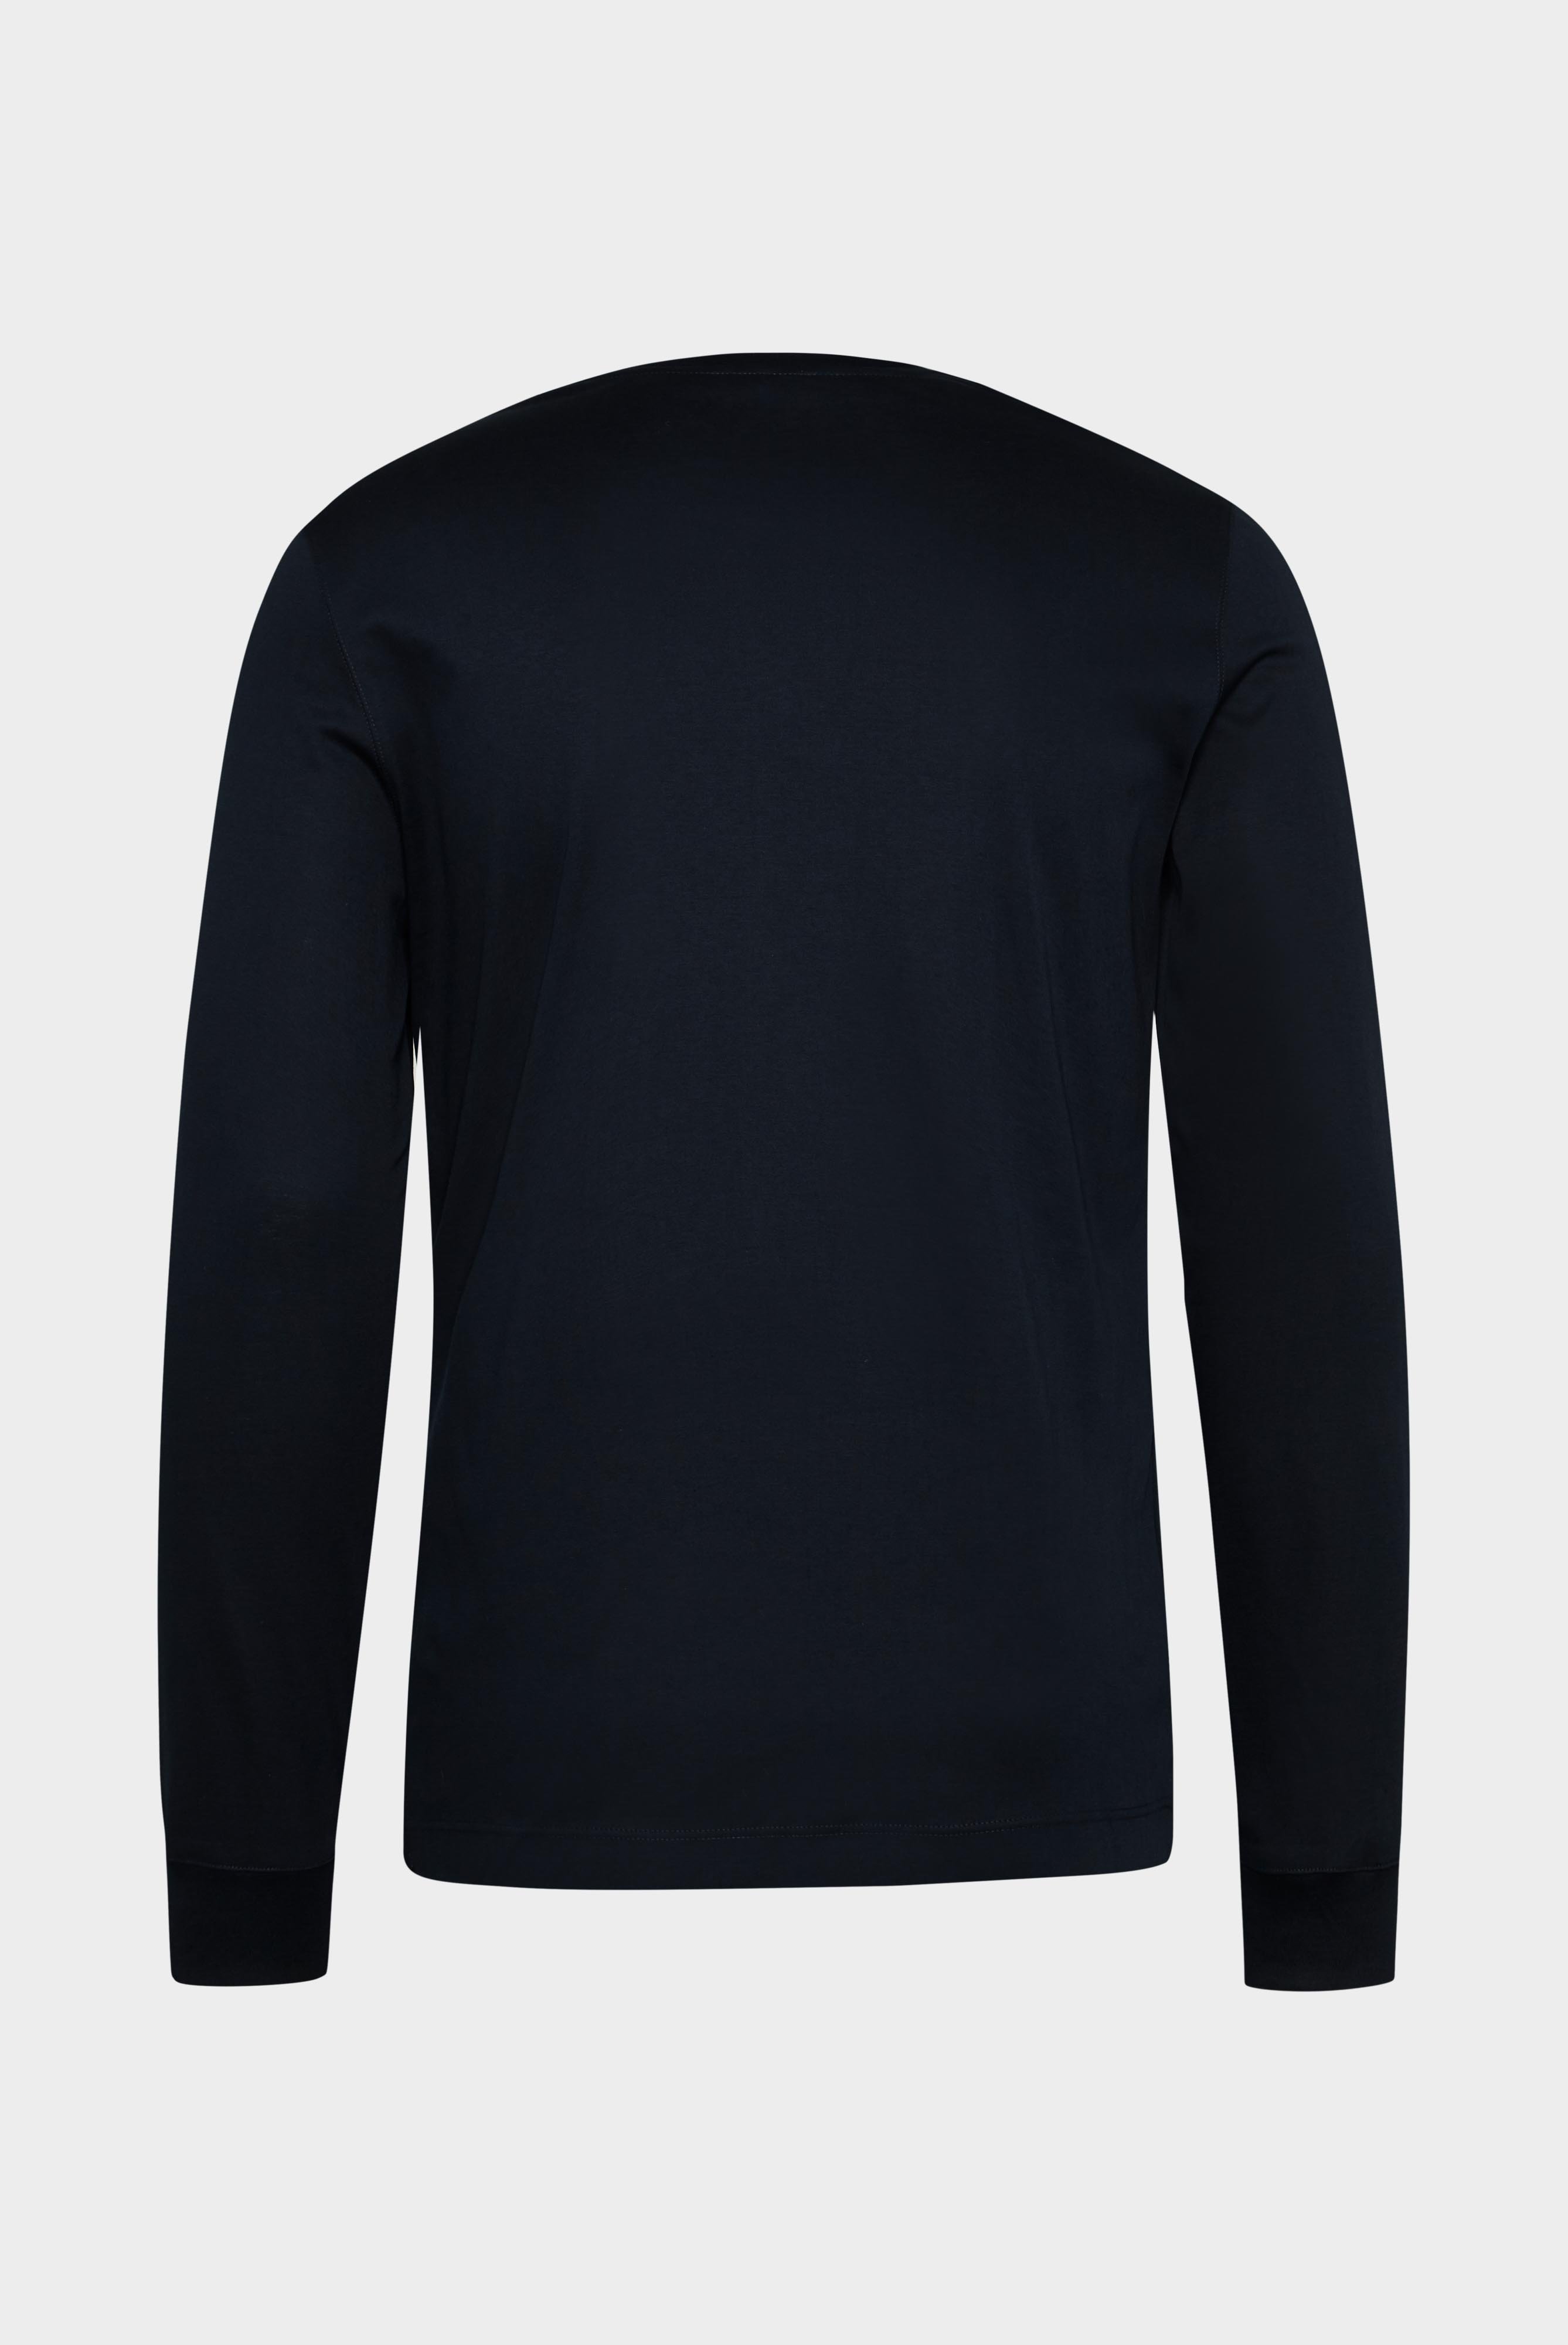 T-Shirts+Langarm Jersey T-Shirt mit Rundhals Slim Fit+20.1718.UX.180031.790.XXL